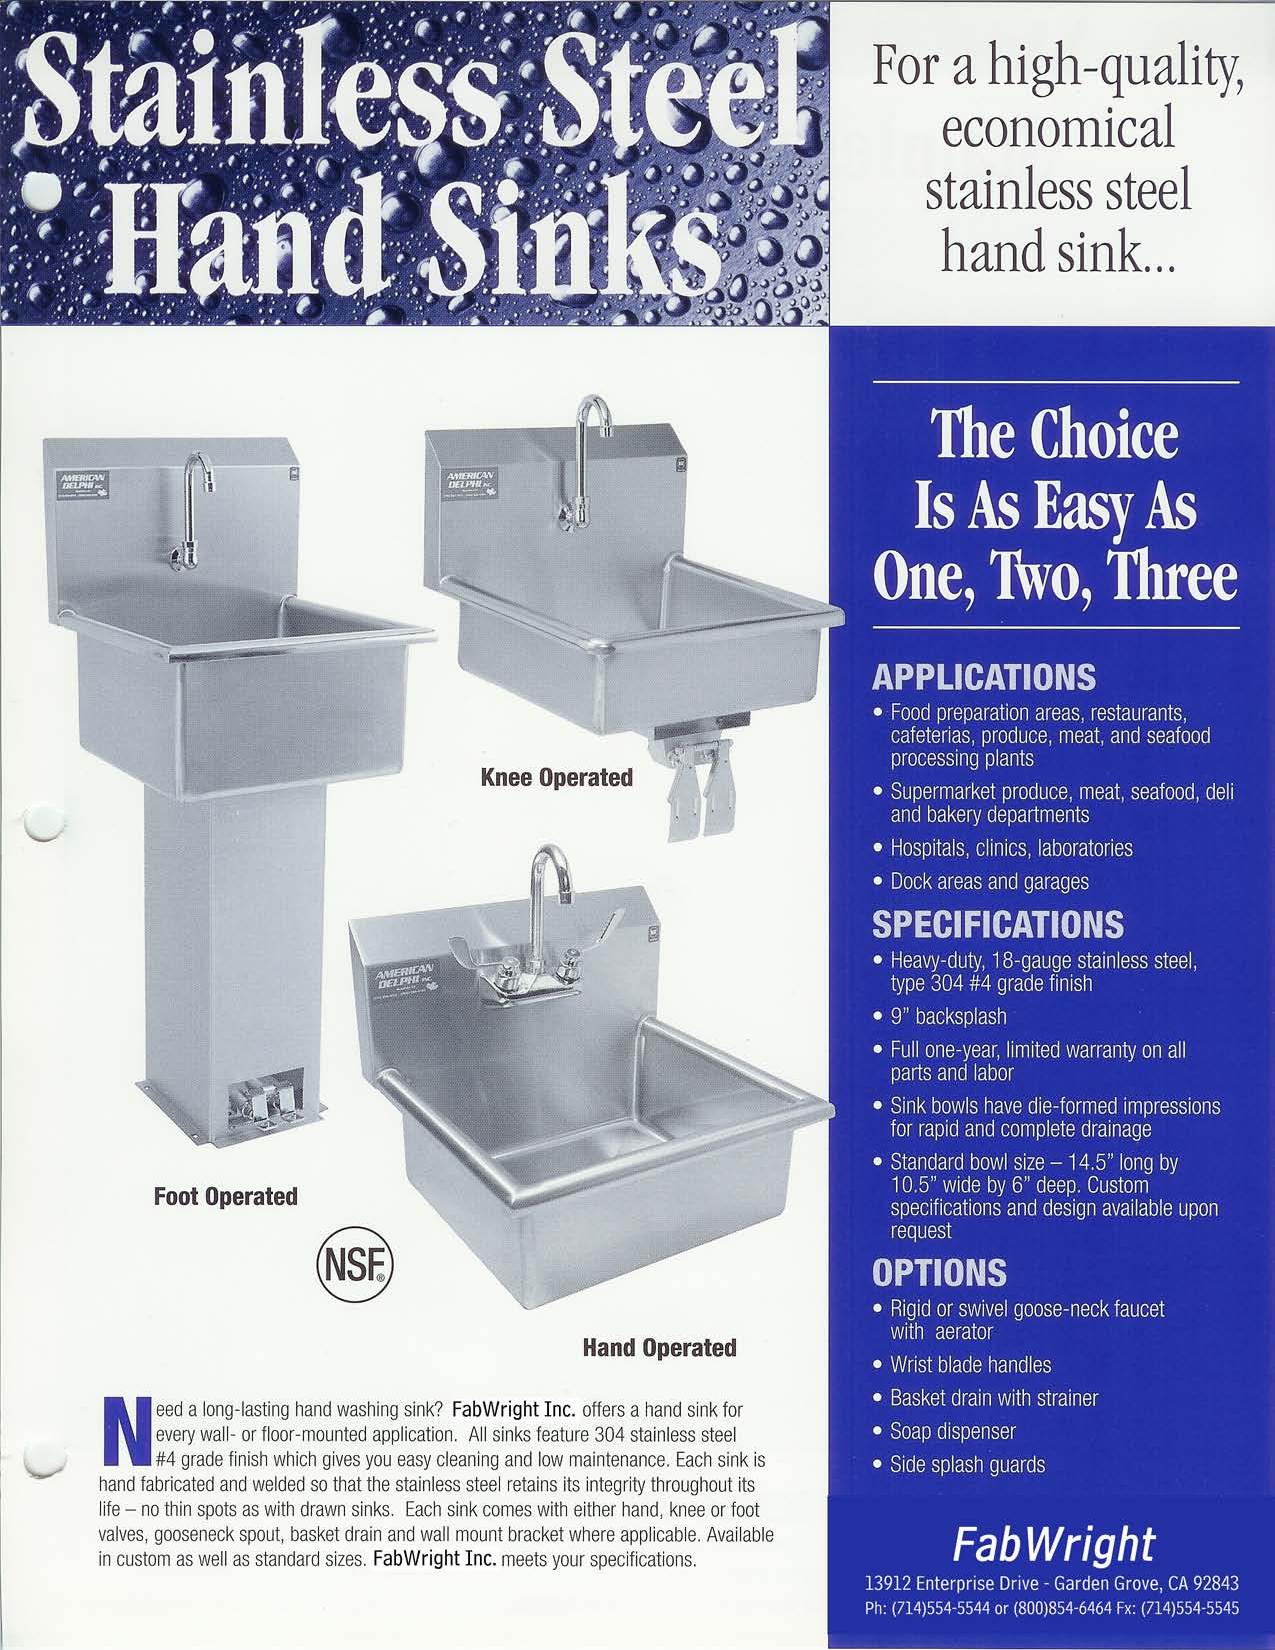 Hand Sinks